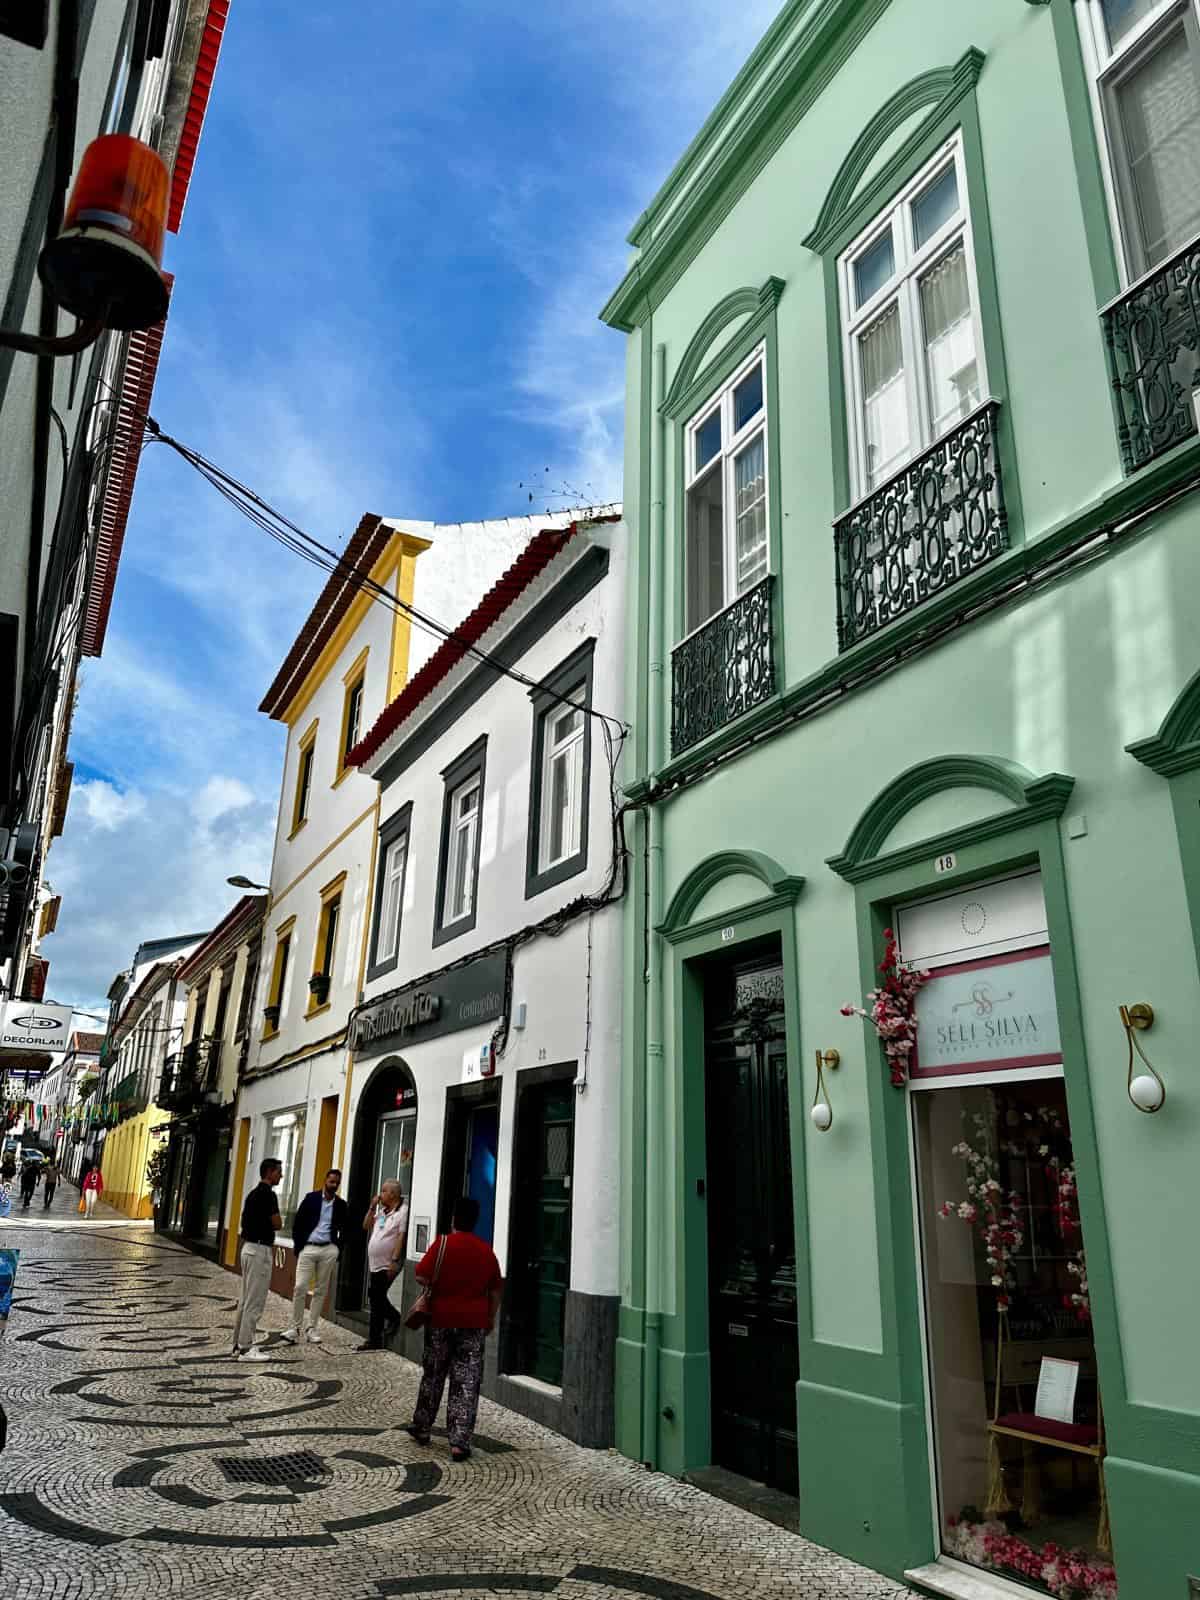 Things to do in Sao Miguel (Azores) - explore Ponta Delgada's colorful buildings